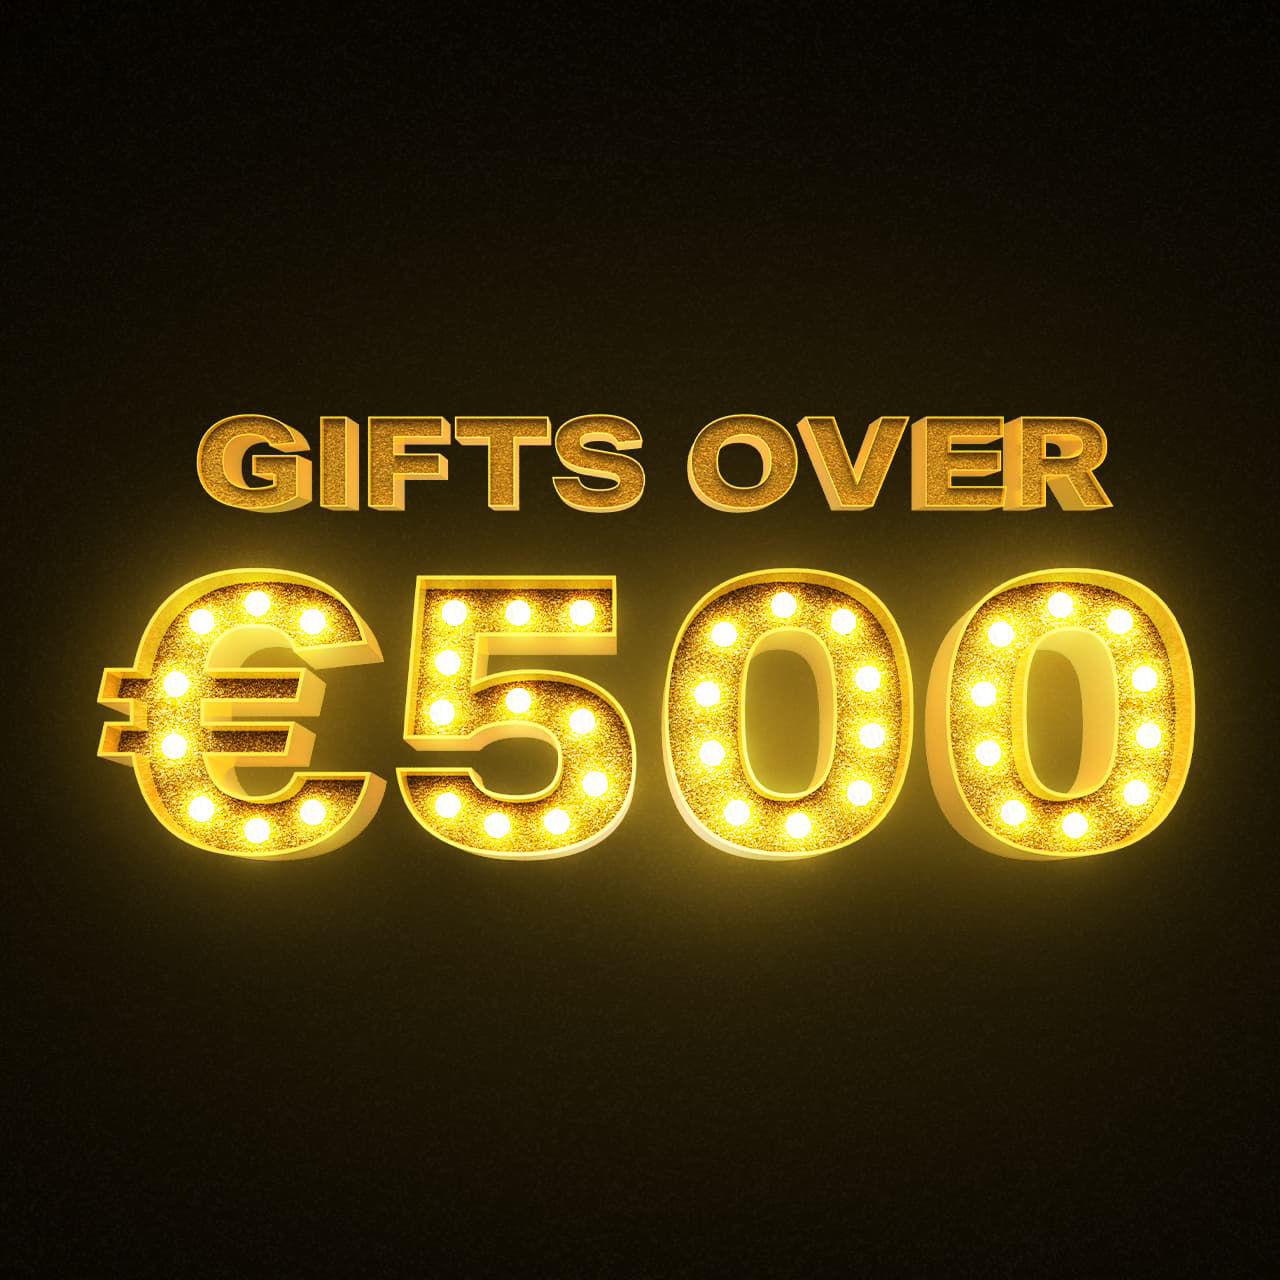 Gifts Under €75